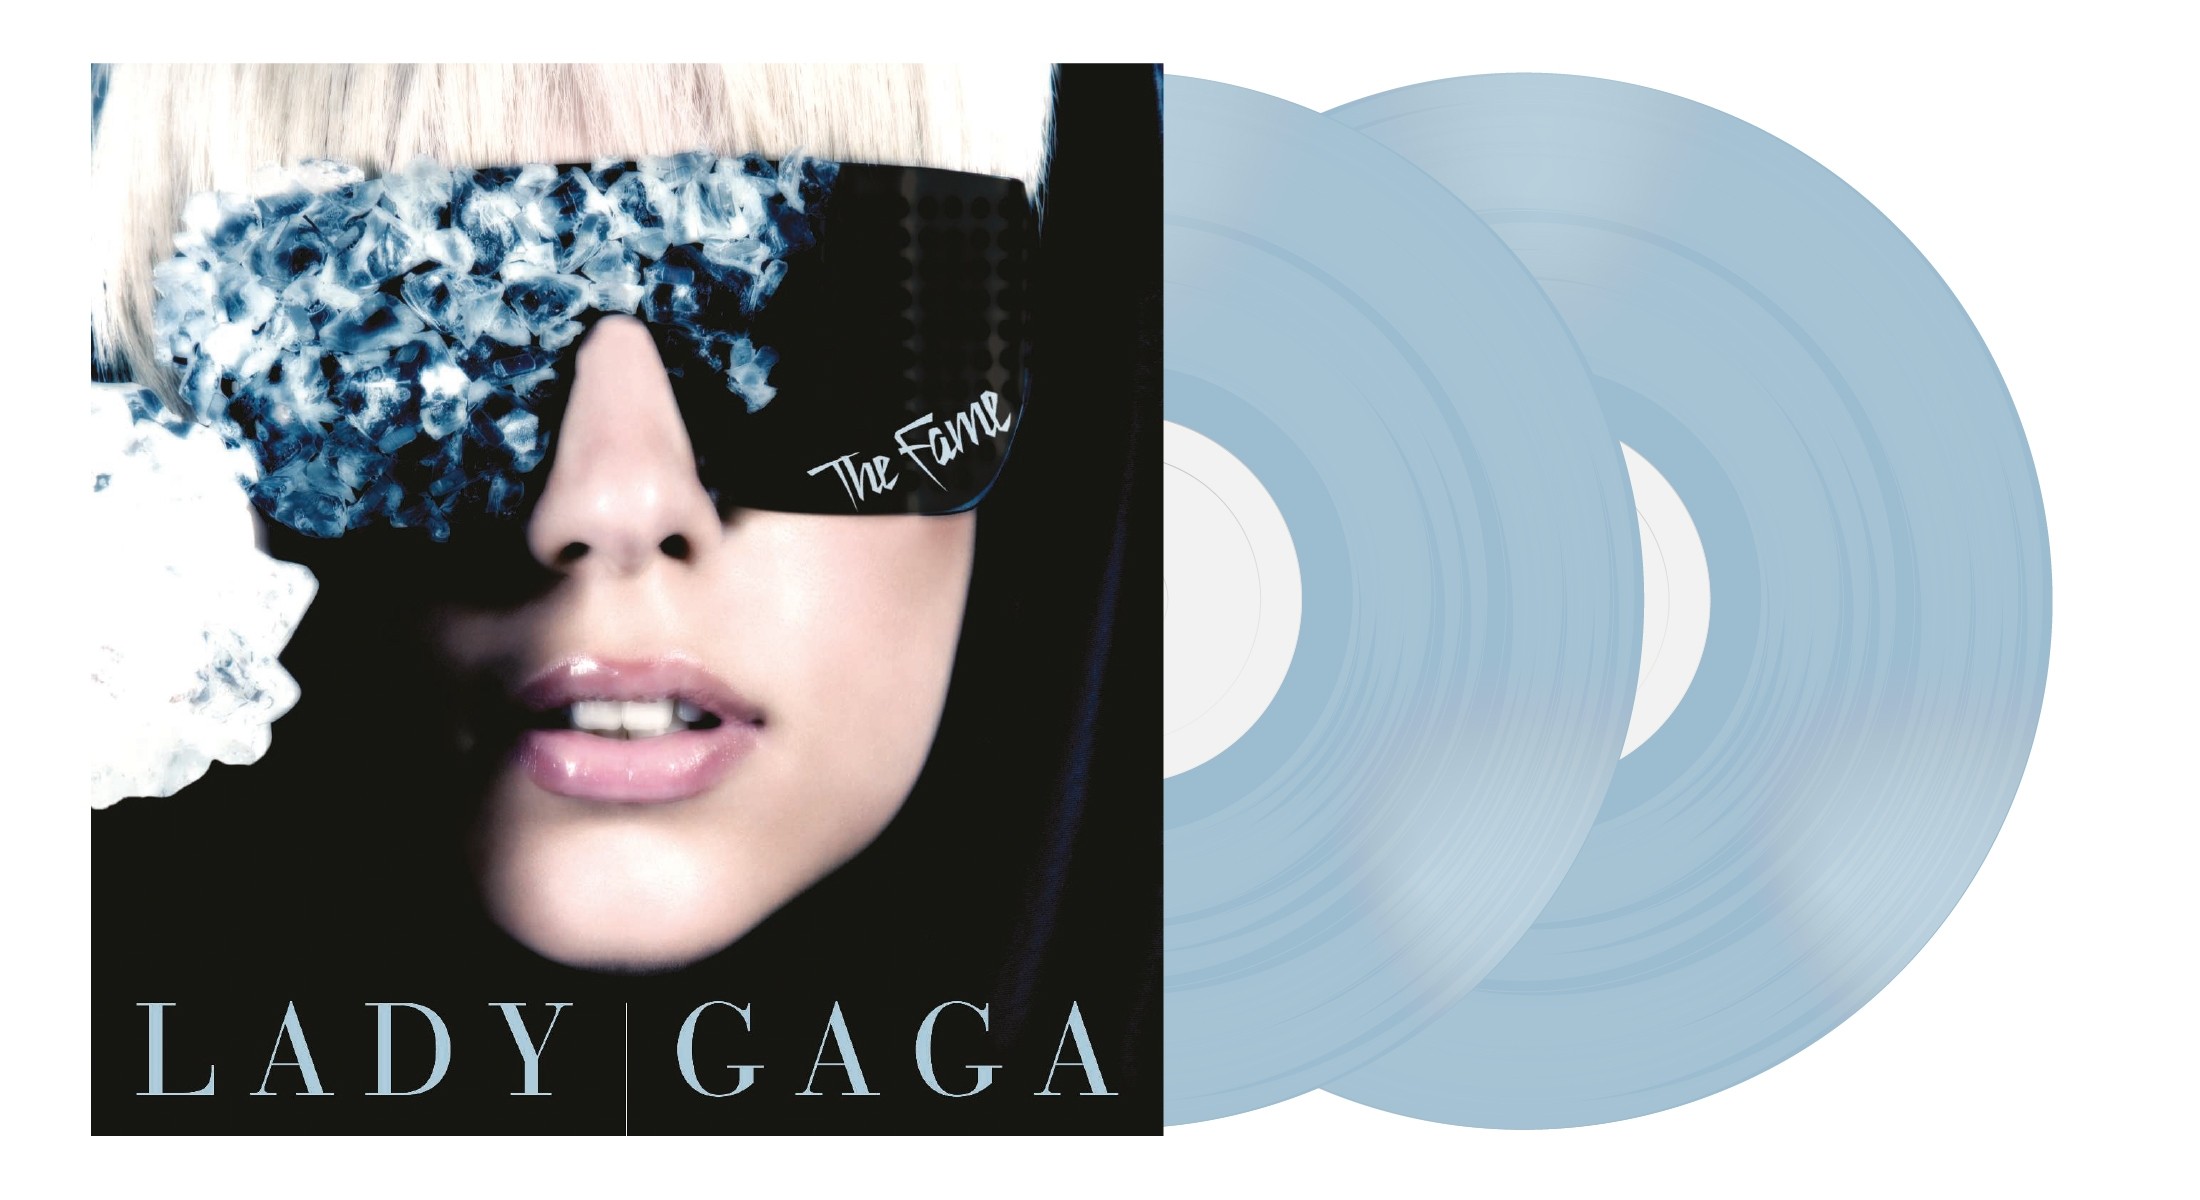 Lady Gaga - The Fame (Blue) 2XLP Vinyl